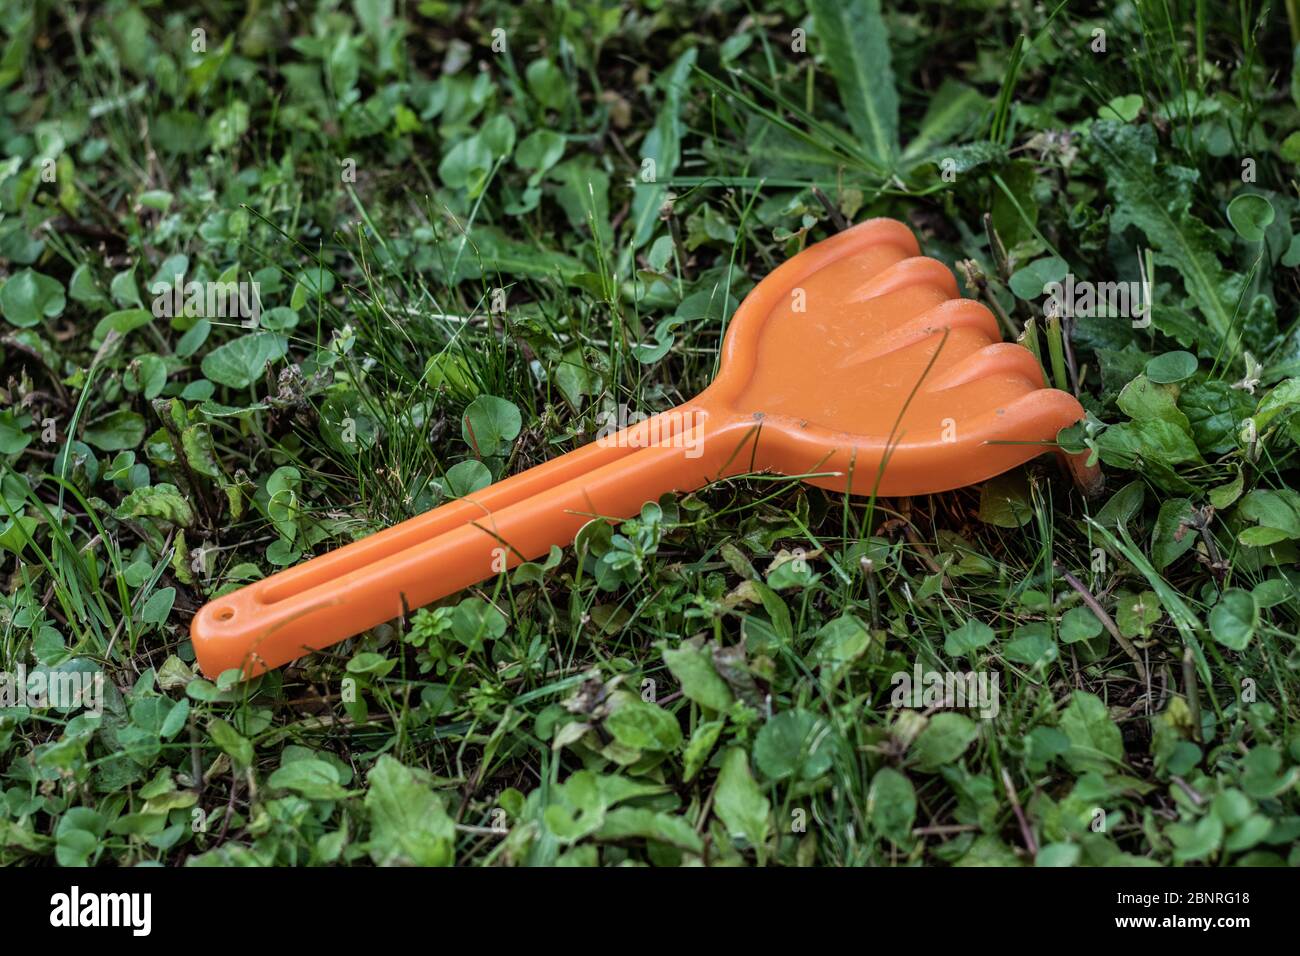 closeup of a small orange plastic toy rake resting on the grass Stock Photo